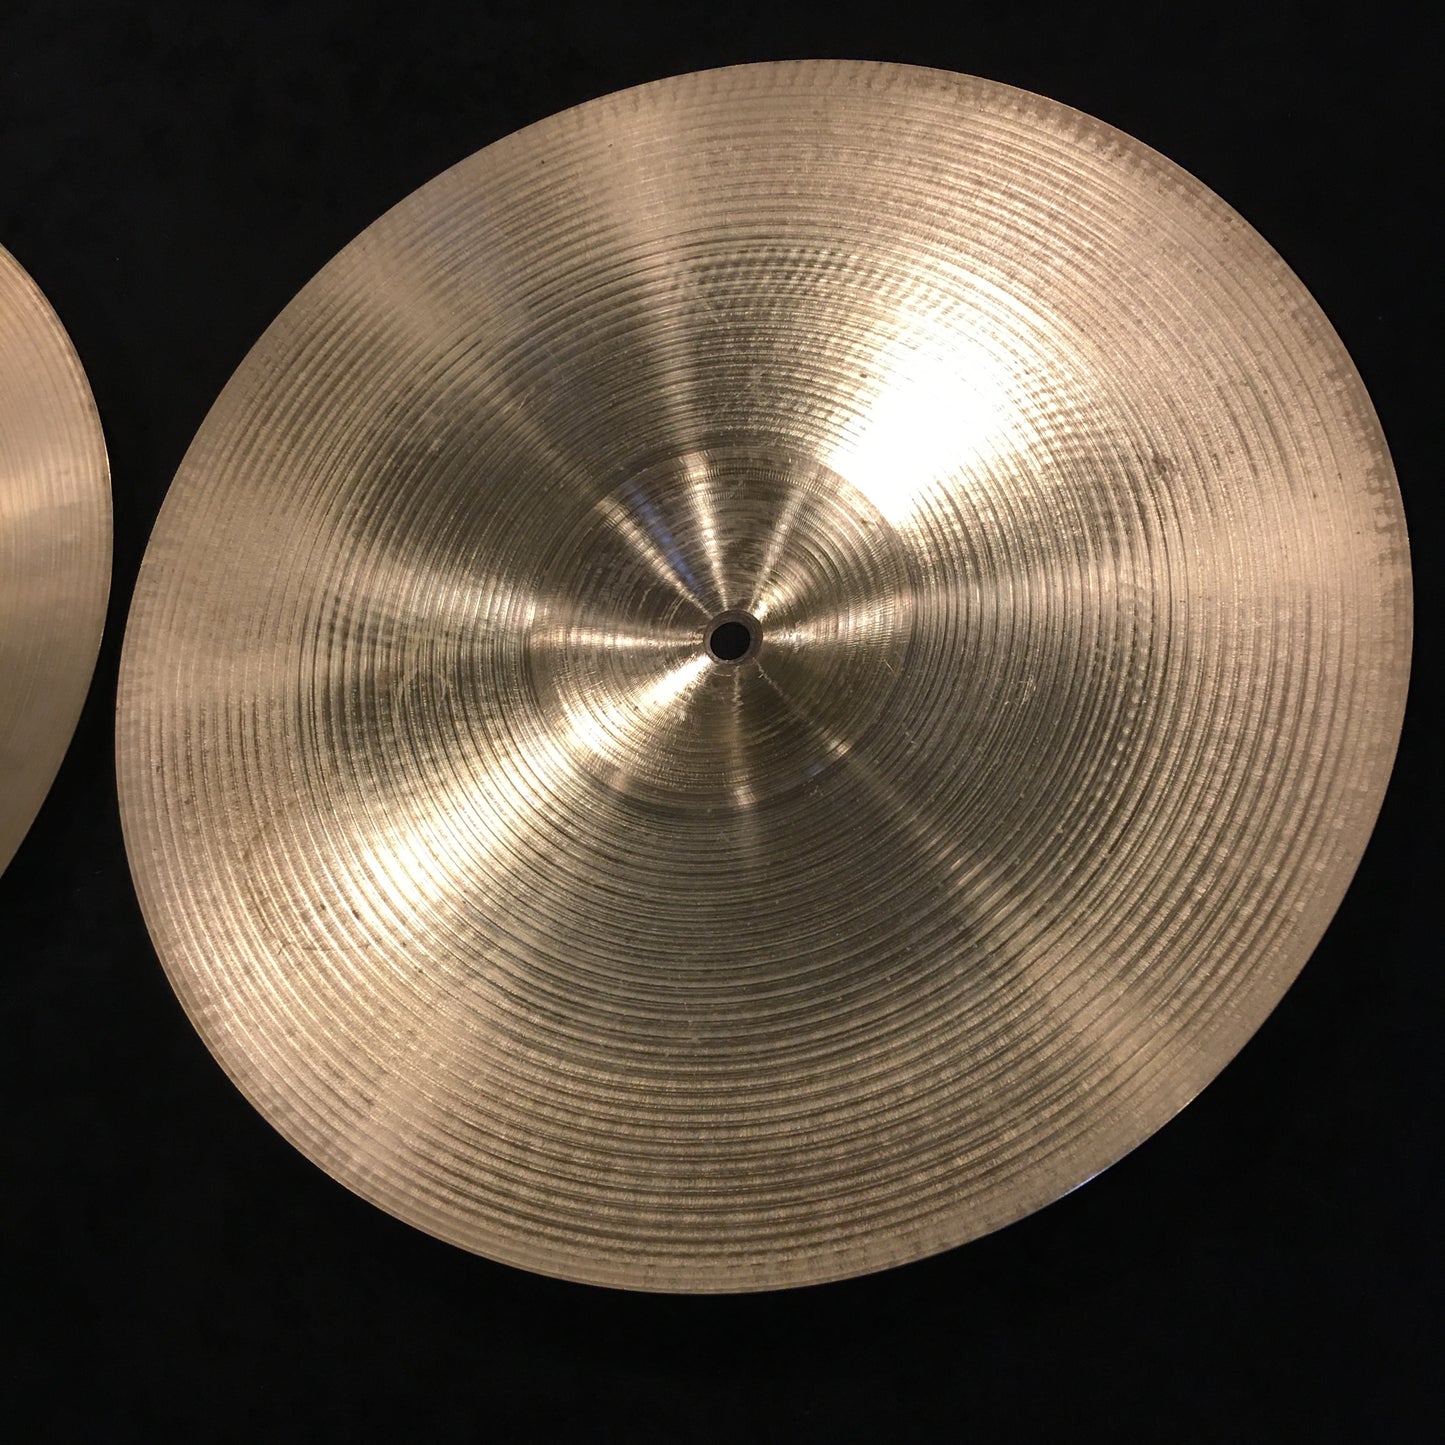 15" Zildjian New Beat Hi-Hat Cymbals 1094g/1520g